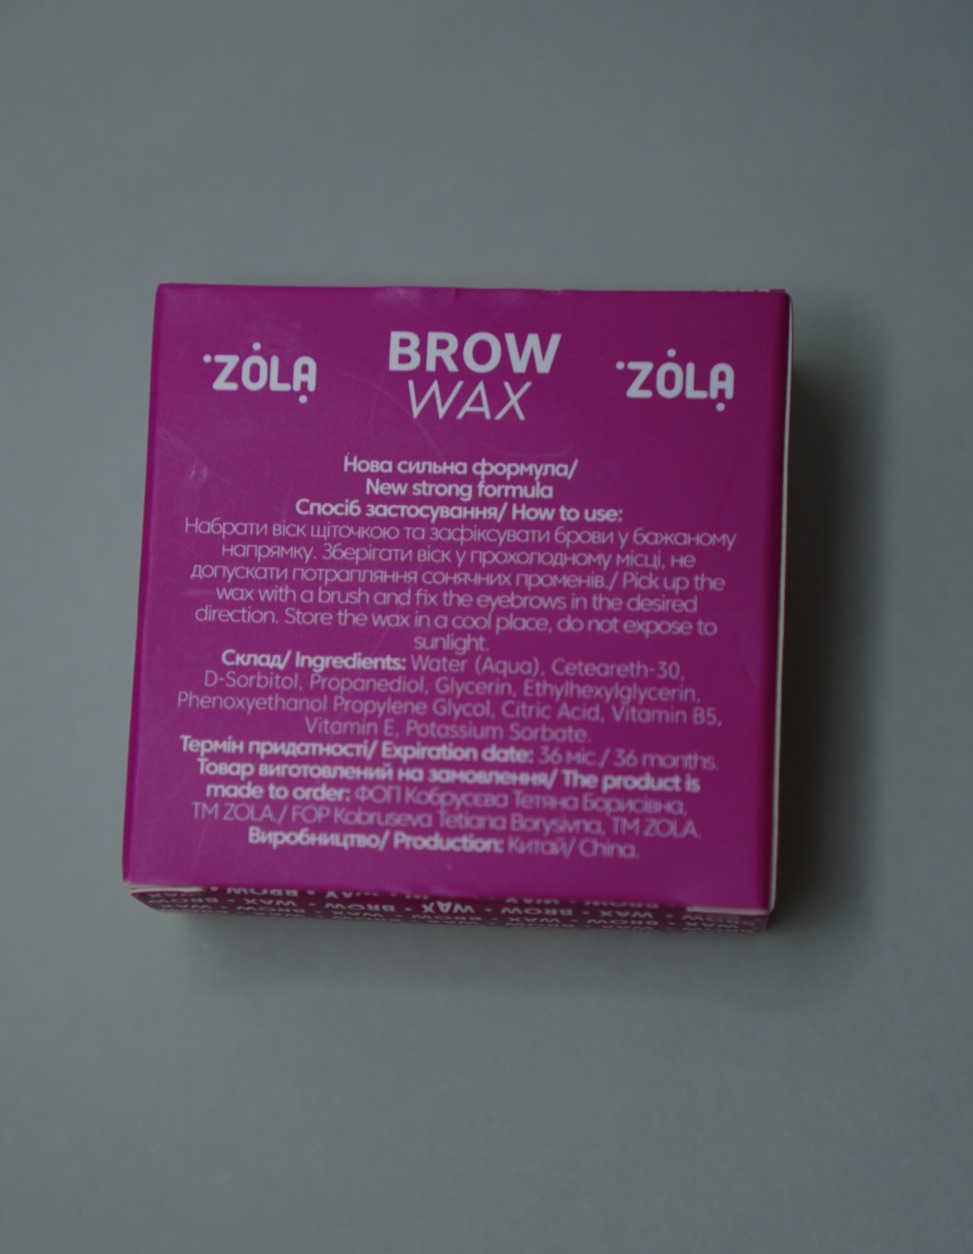 Враження про Zola Brow Wax